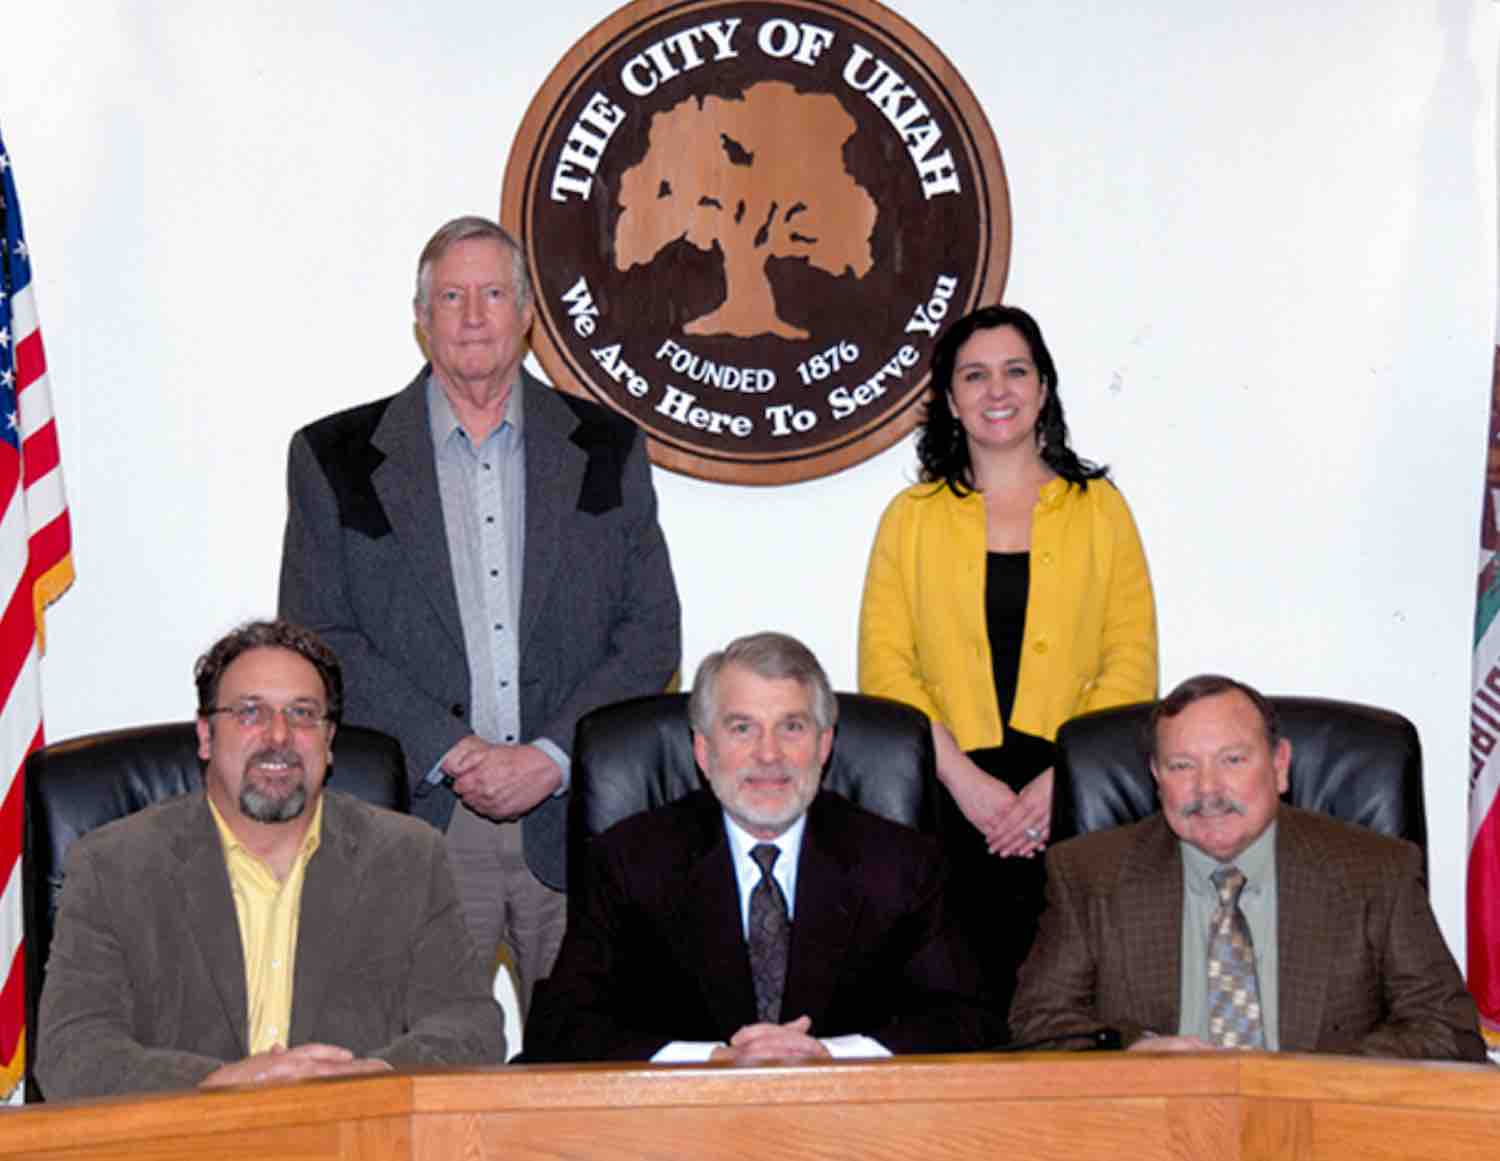 Ukiah City Council members: Kevin Doble, Stephen Scalmanini, Jim Brown (seated), Douglas Crane, Maureen Mulheren (standing). Photo courtesy city of Ukiah.